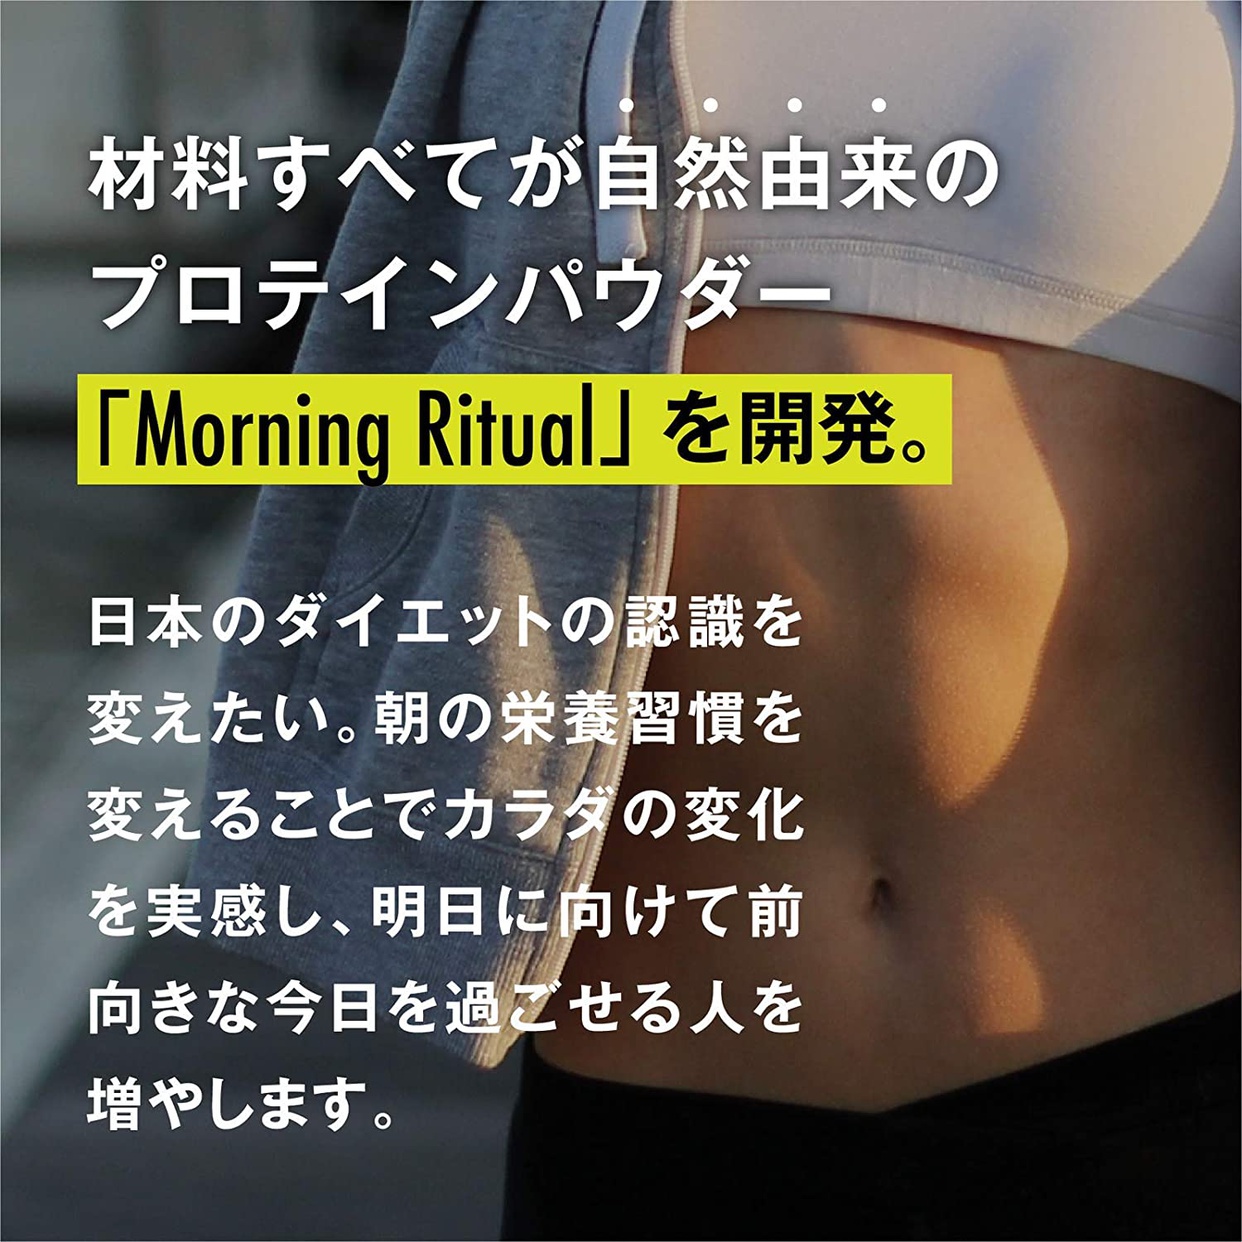 Morning Ritual(モーニングリチュアル) プロテイン パウダーの商品画像2 